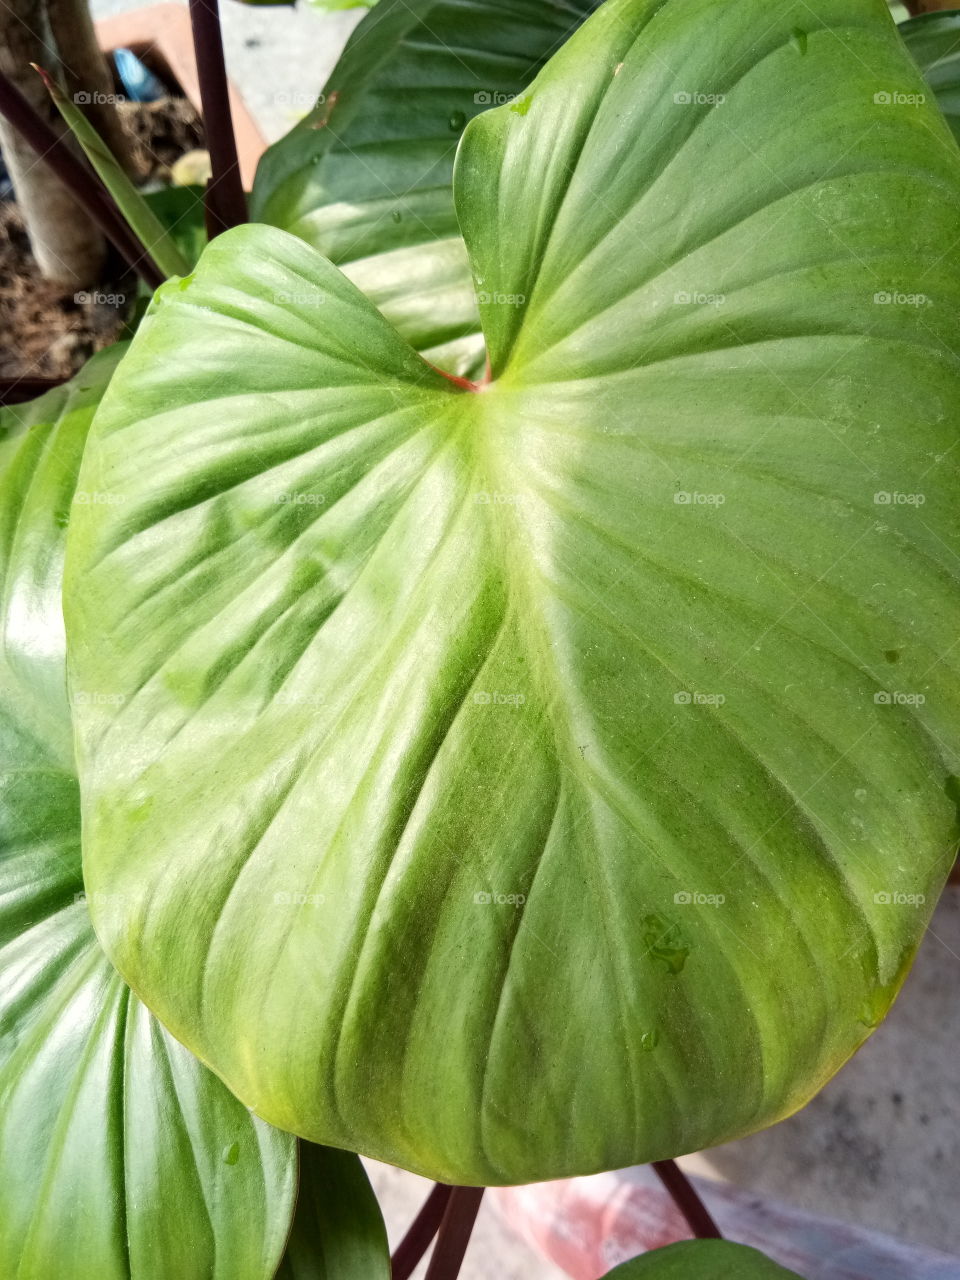 leaf
green